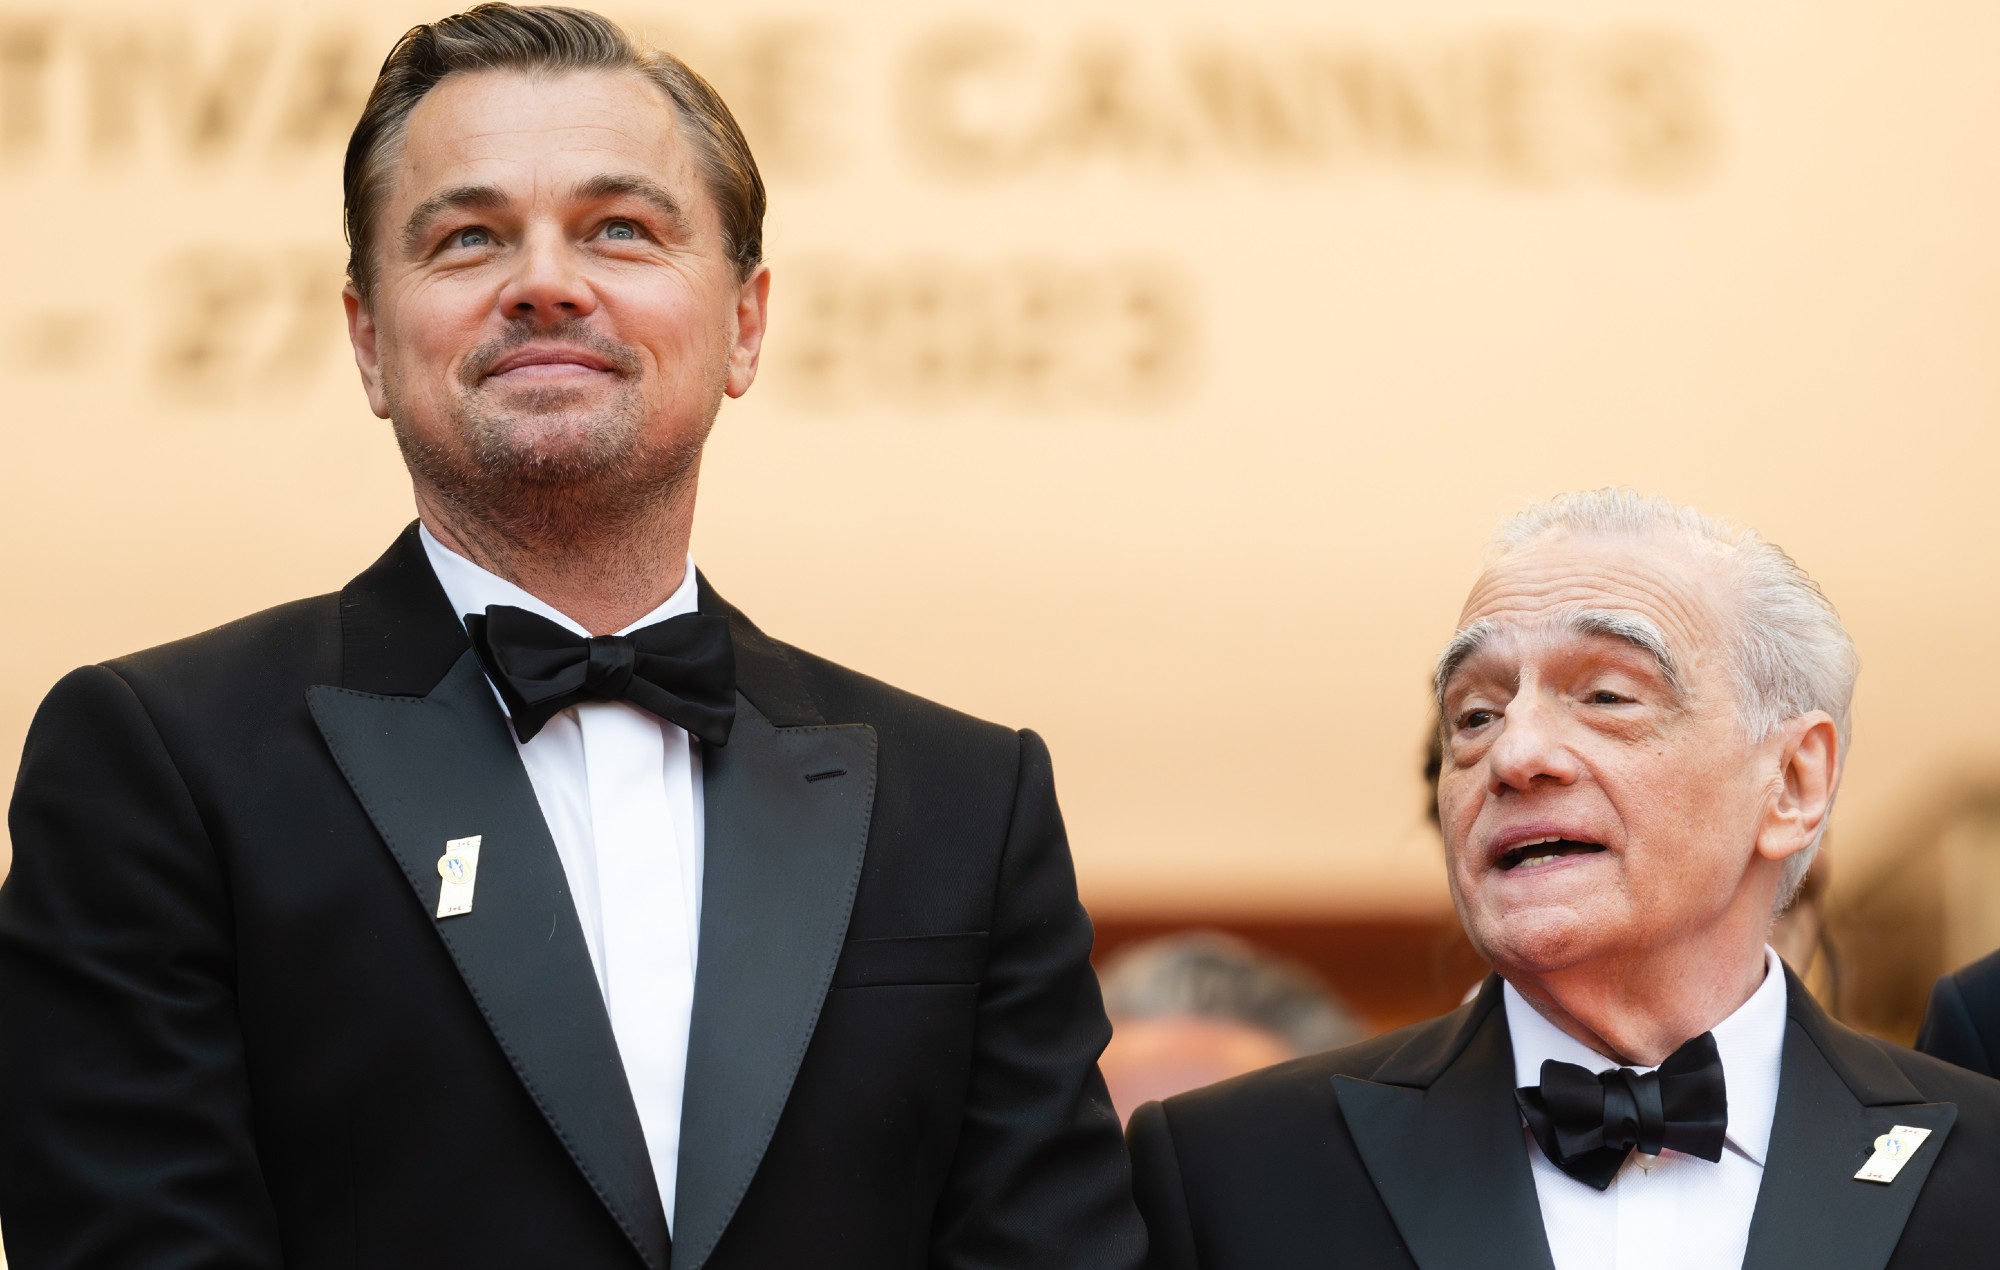 What is Leonardo DiCaprio's next movie?